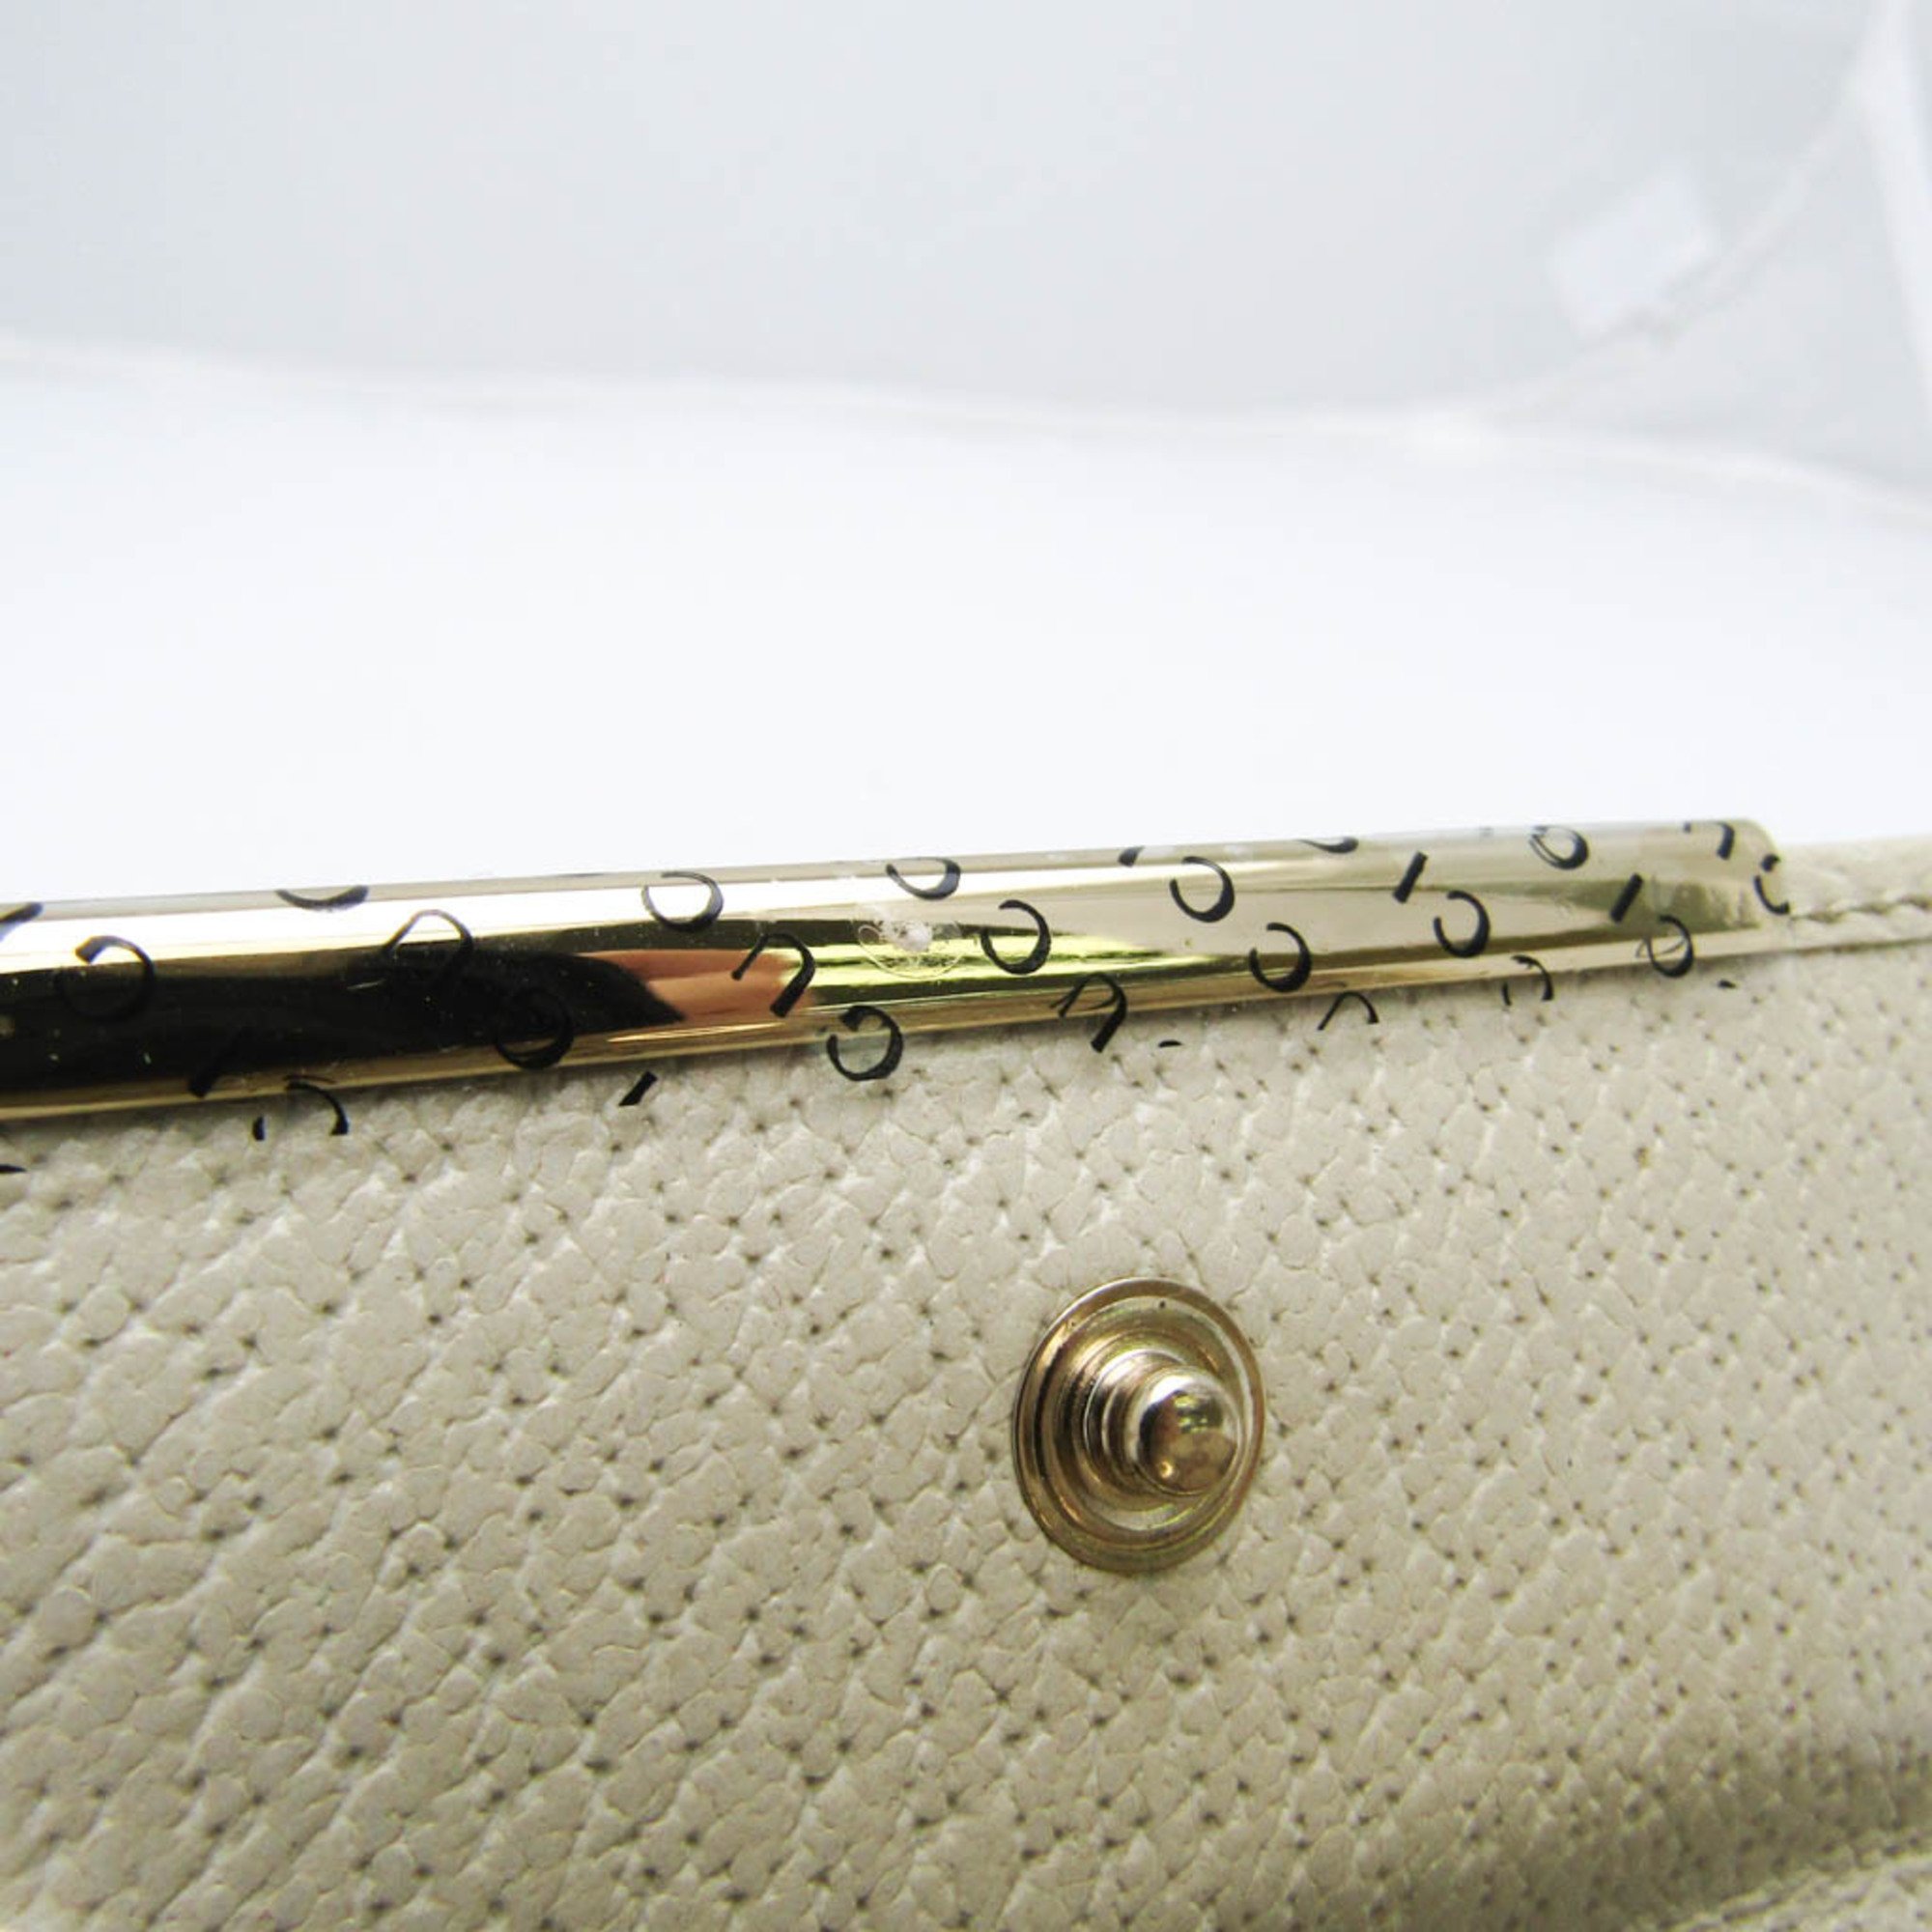 Gucci 127048 Men,Women GG Canvas Leather Key Case Beige,Brown,Off-white